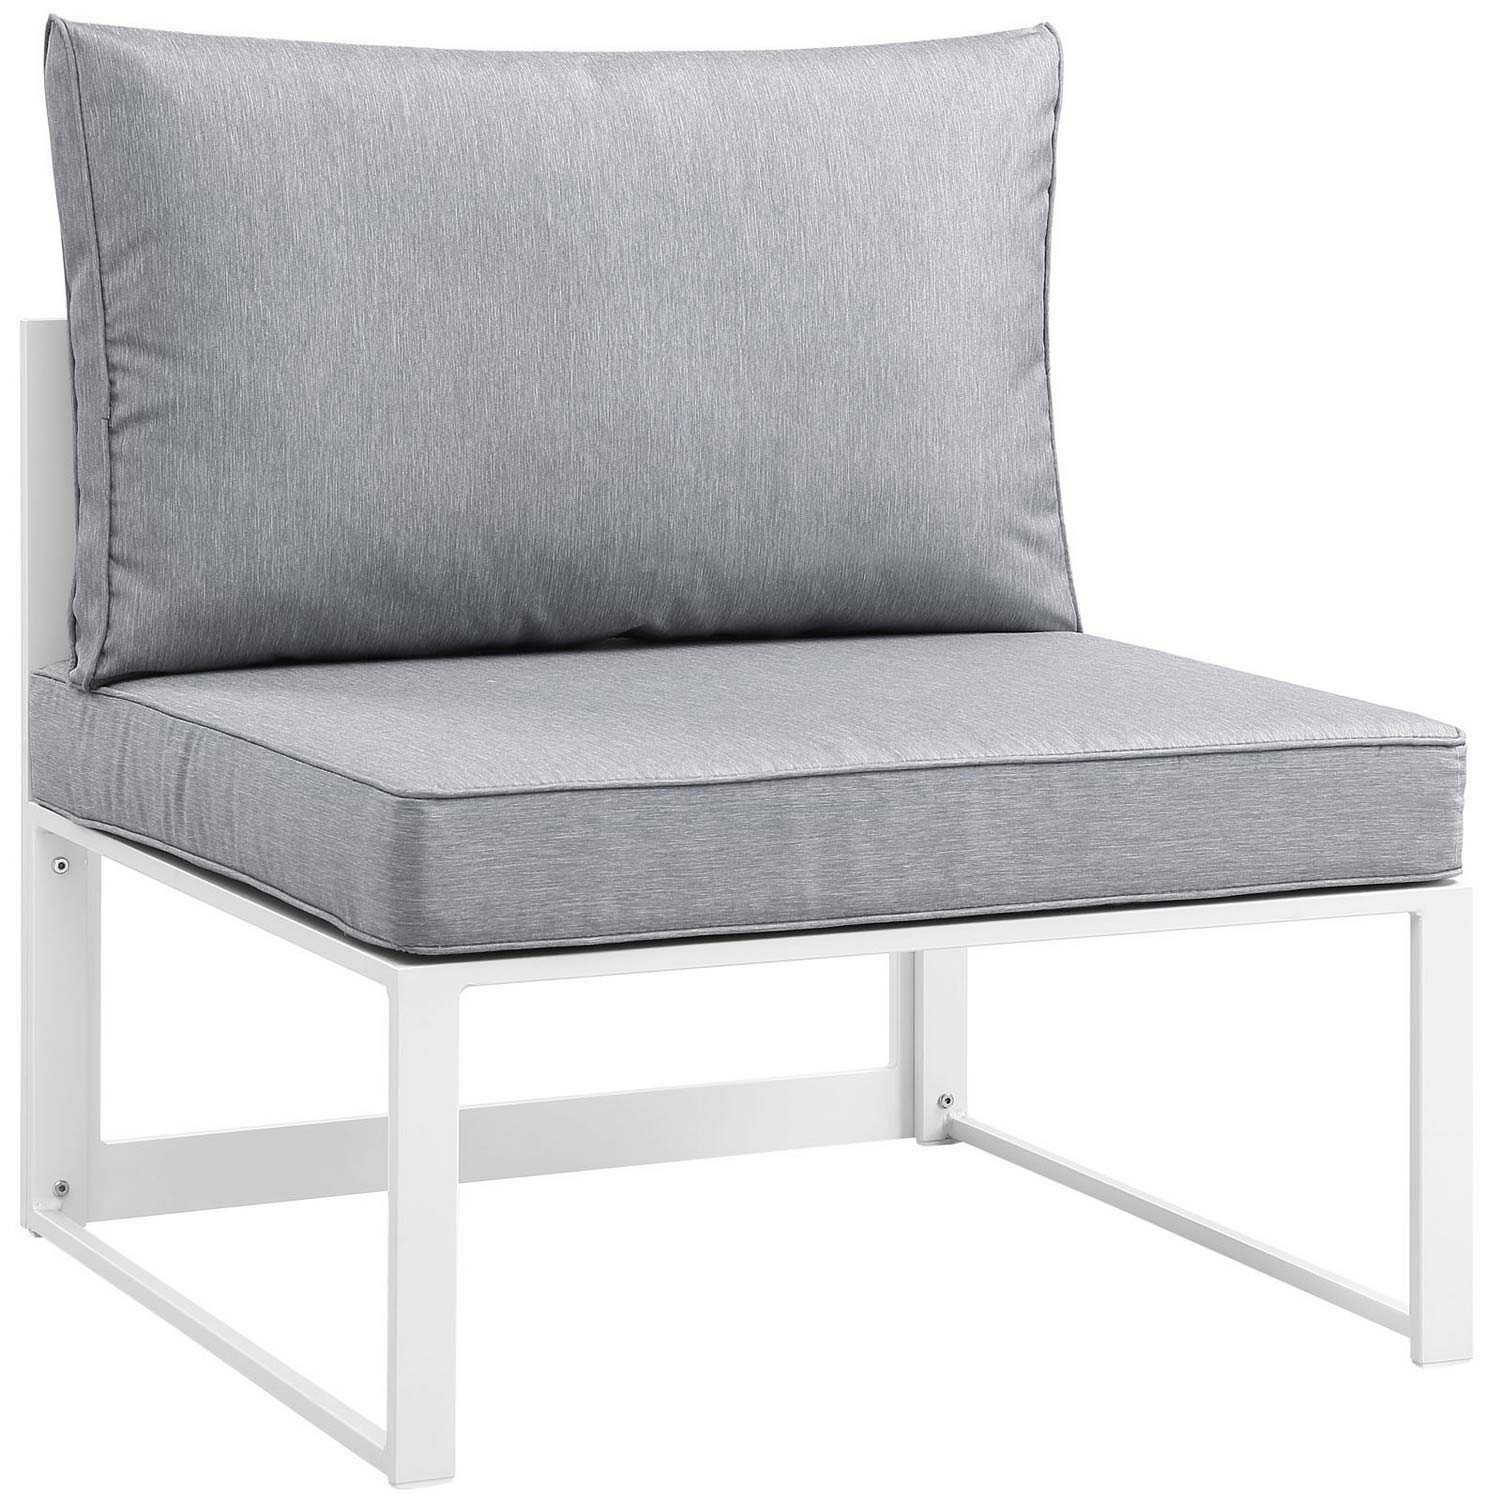 Modway Fortuna Armless Outdoor Patio Sofa - White/Gray